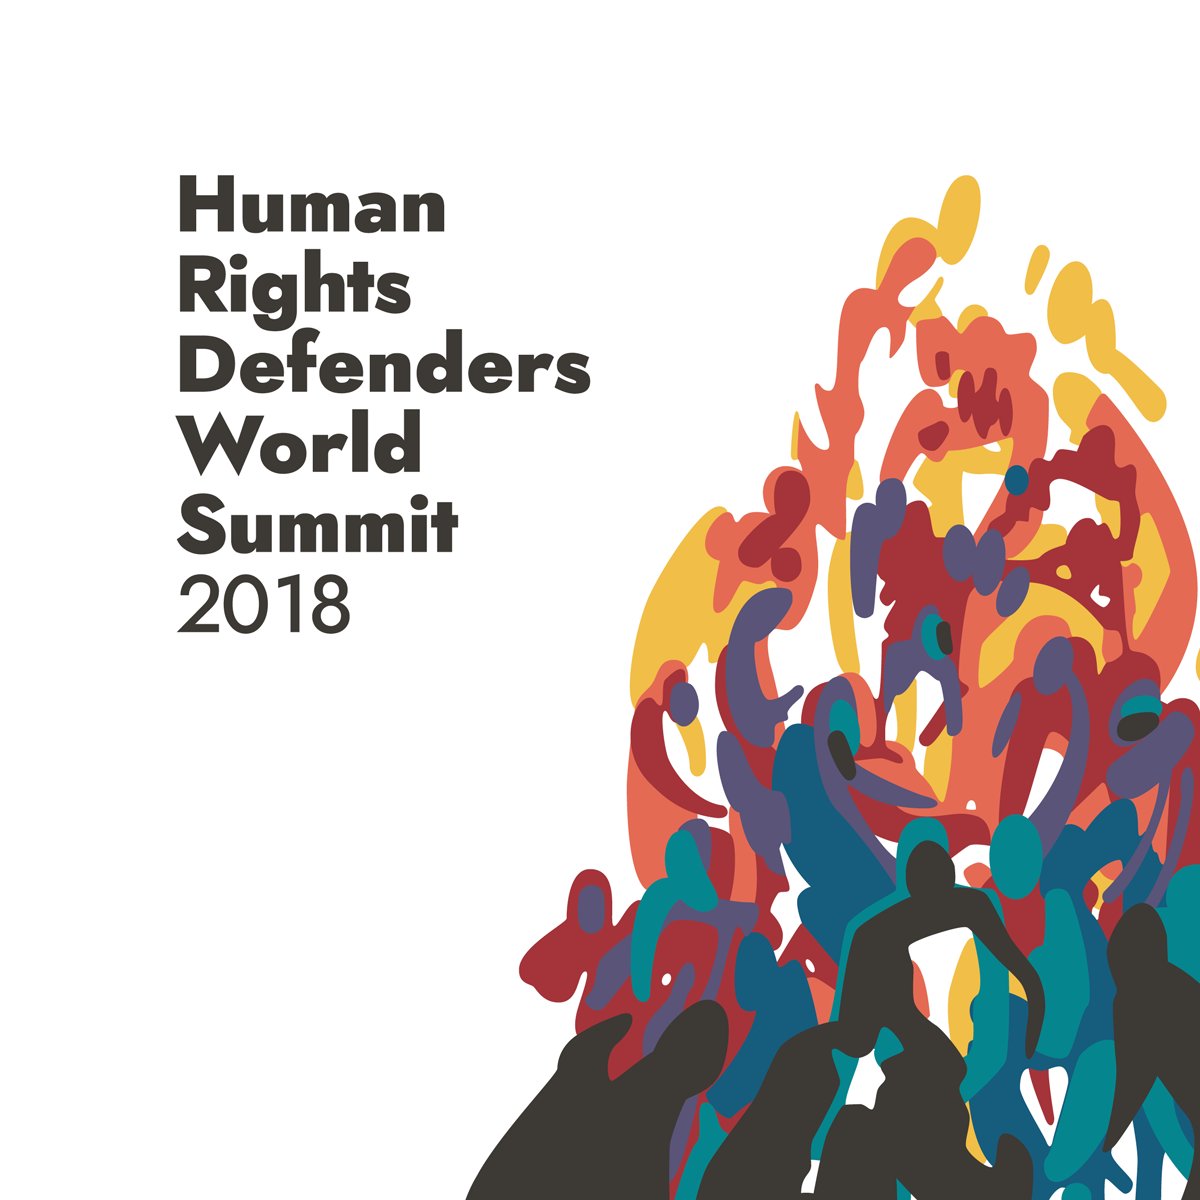 Human Rights Defenders World Summit 2018